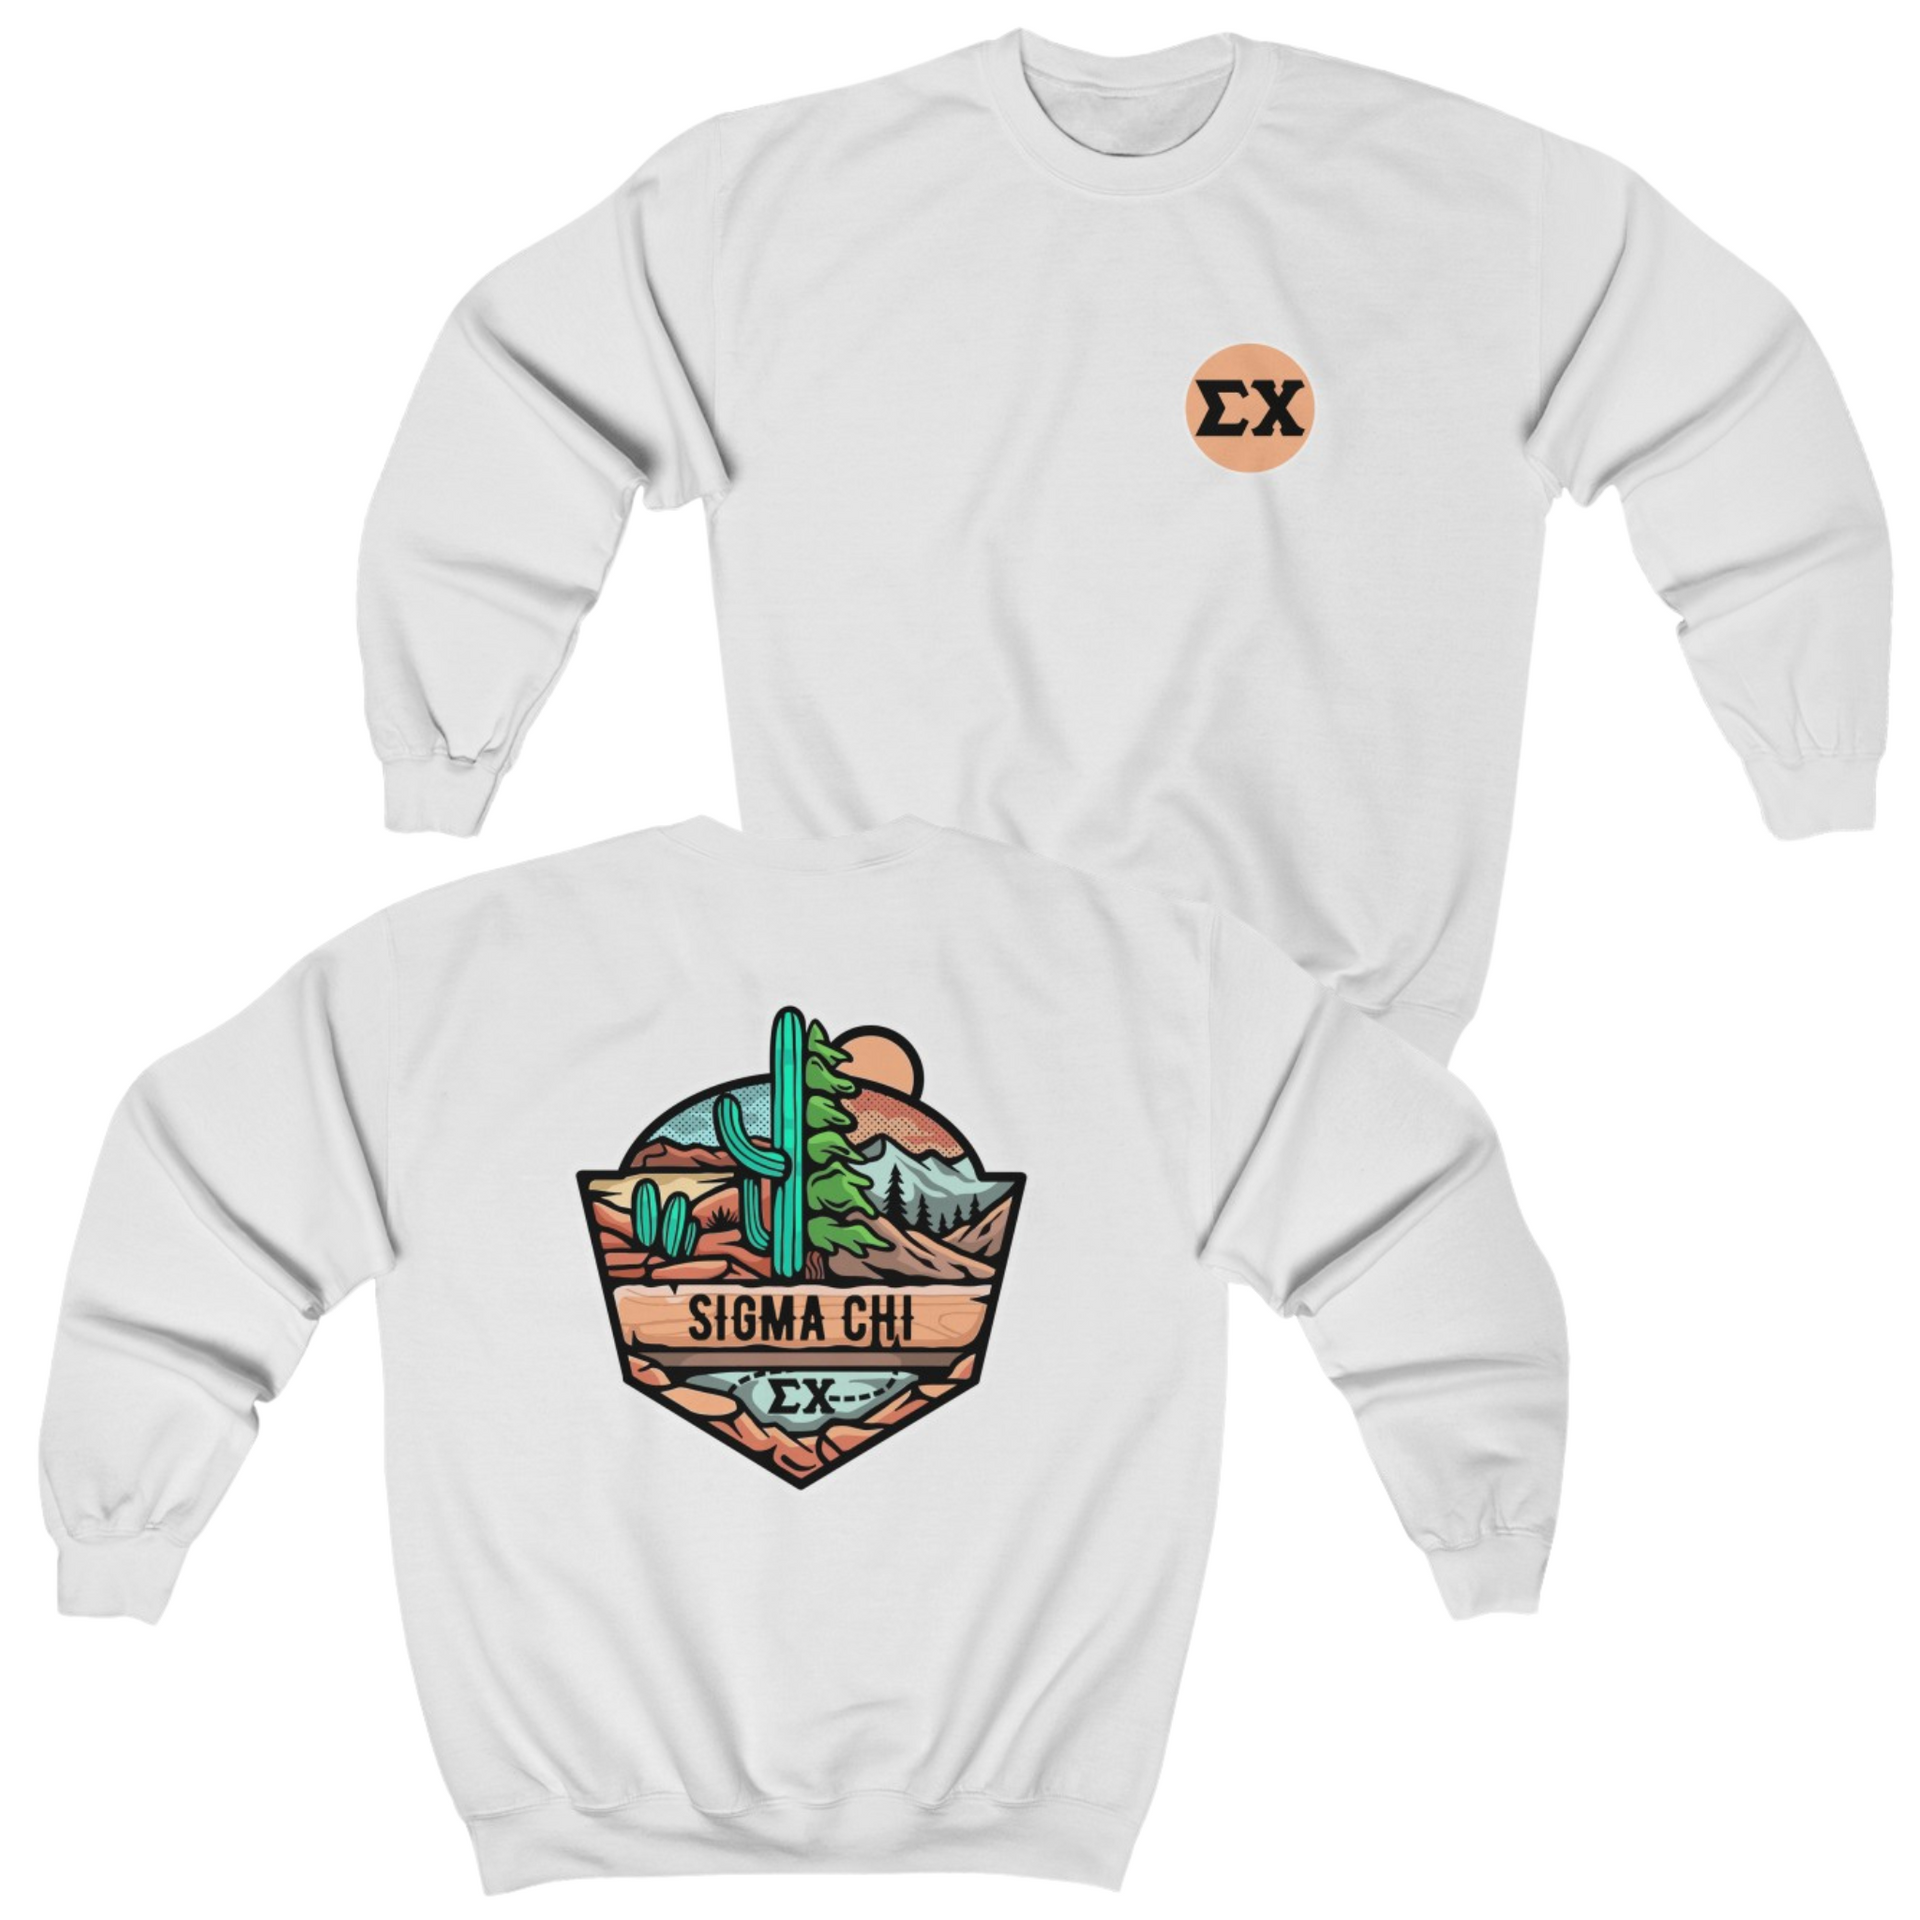 White Sigma Chi Graphic Crewneck Sweatshirt | Desert Mountains | Sigma Chi Fraternity Apparel